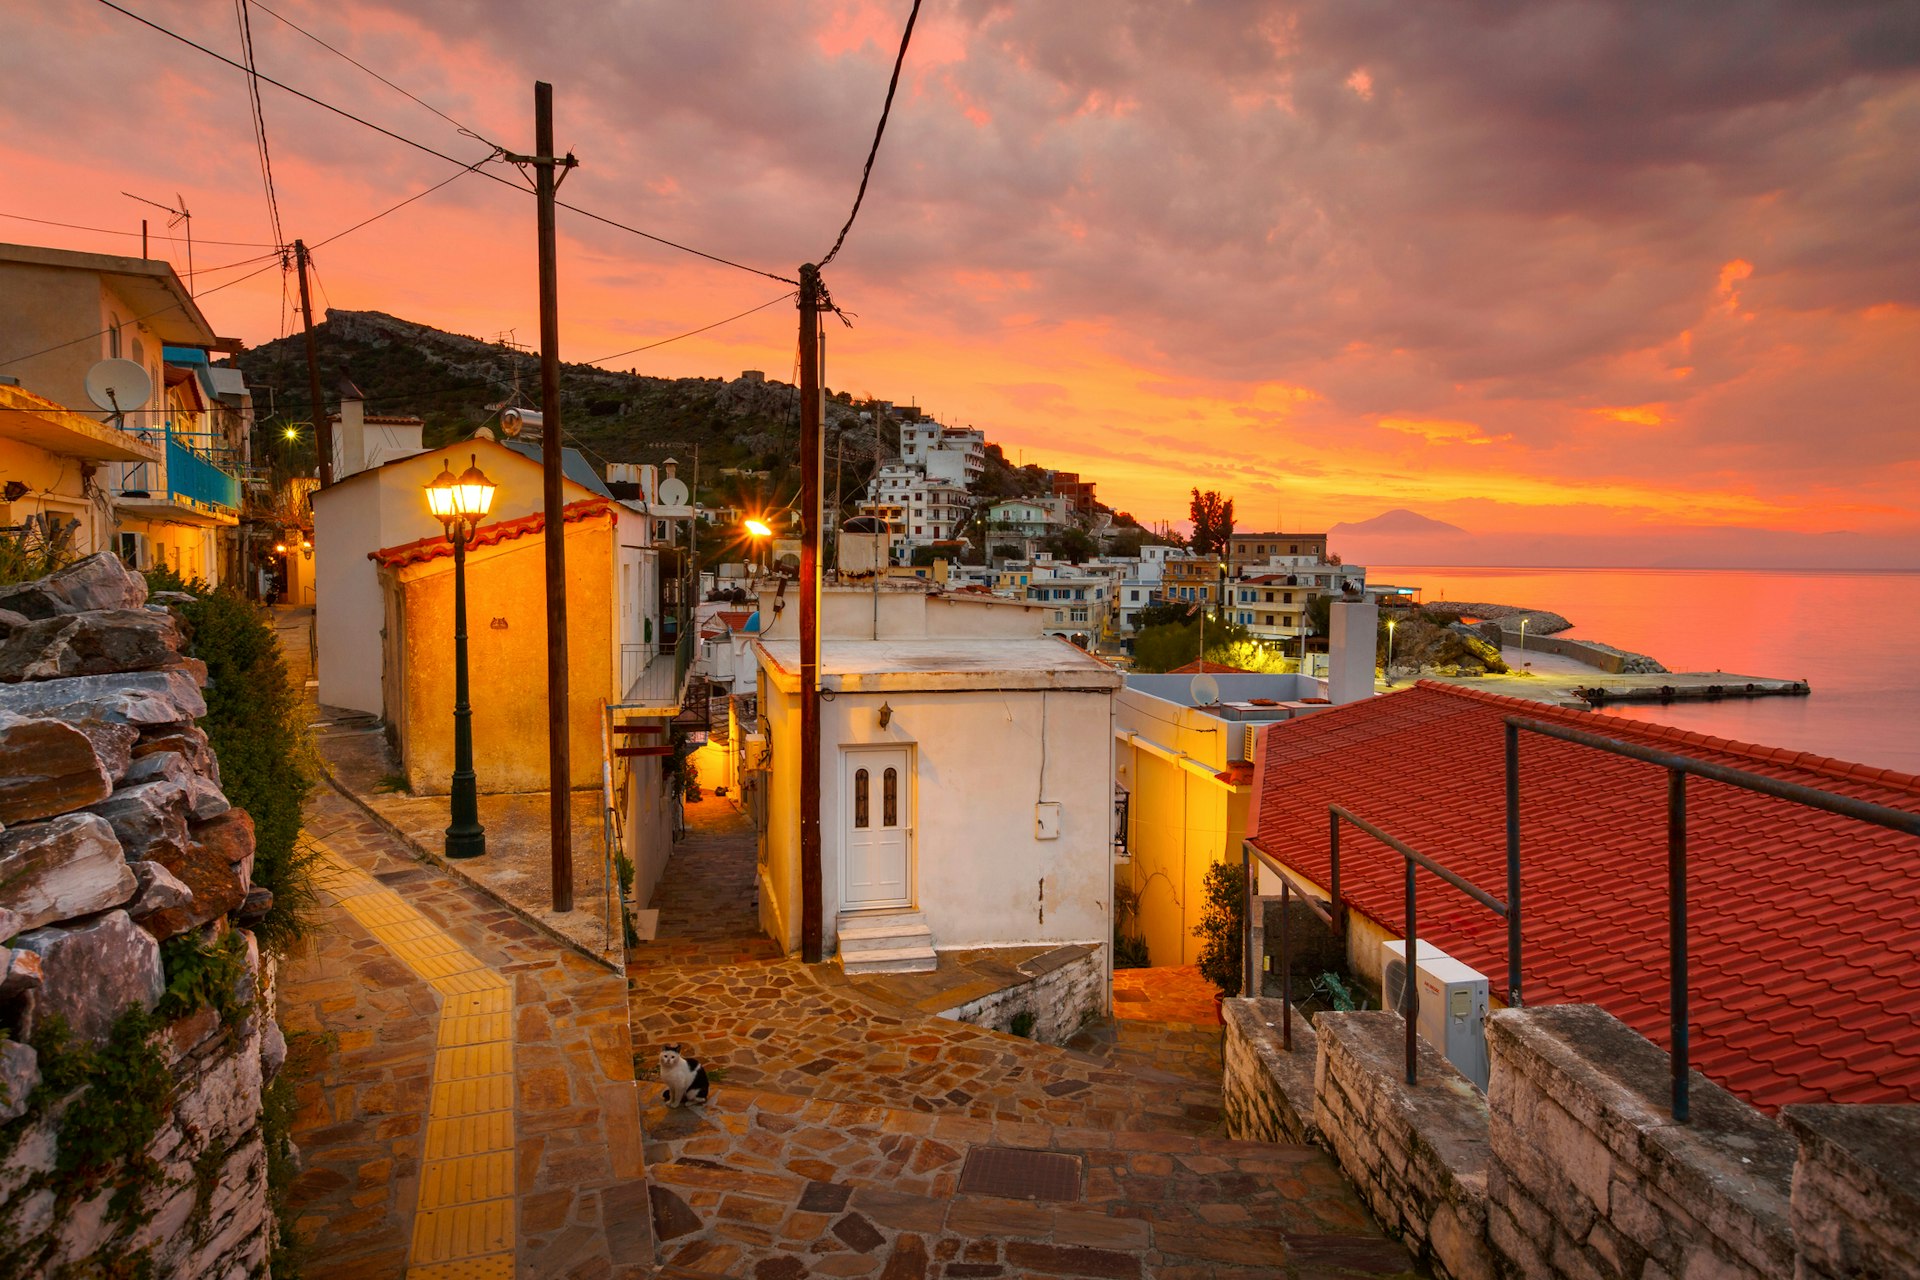 The quiet streets of Agios Kirikos village on Ikaria island in Greece at sunset